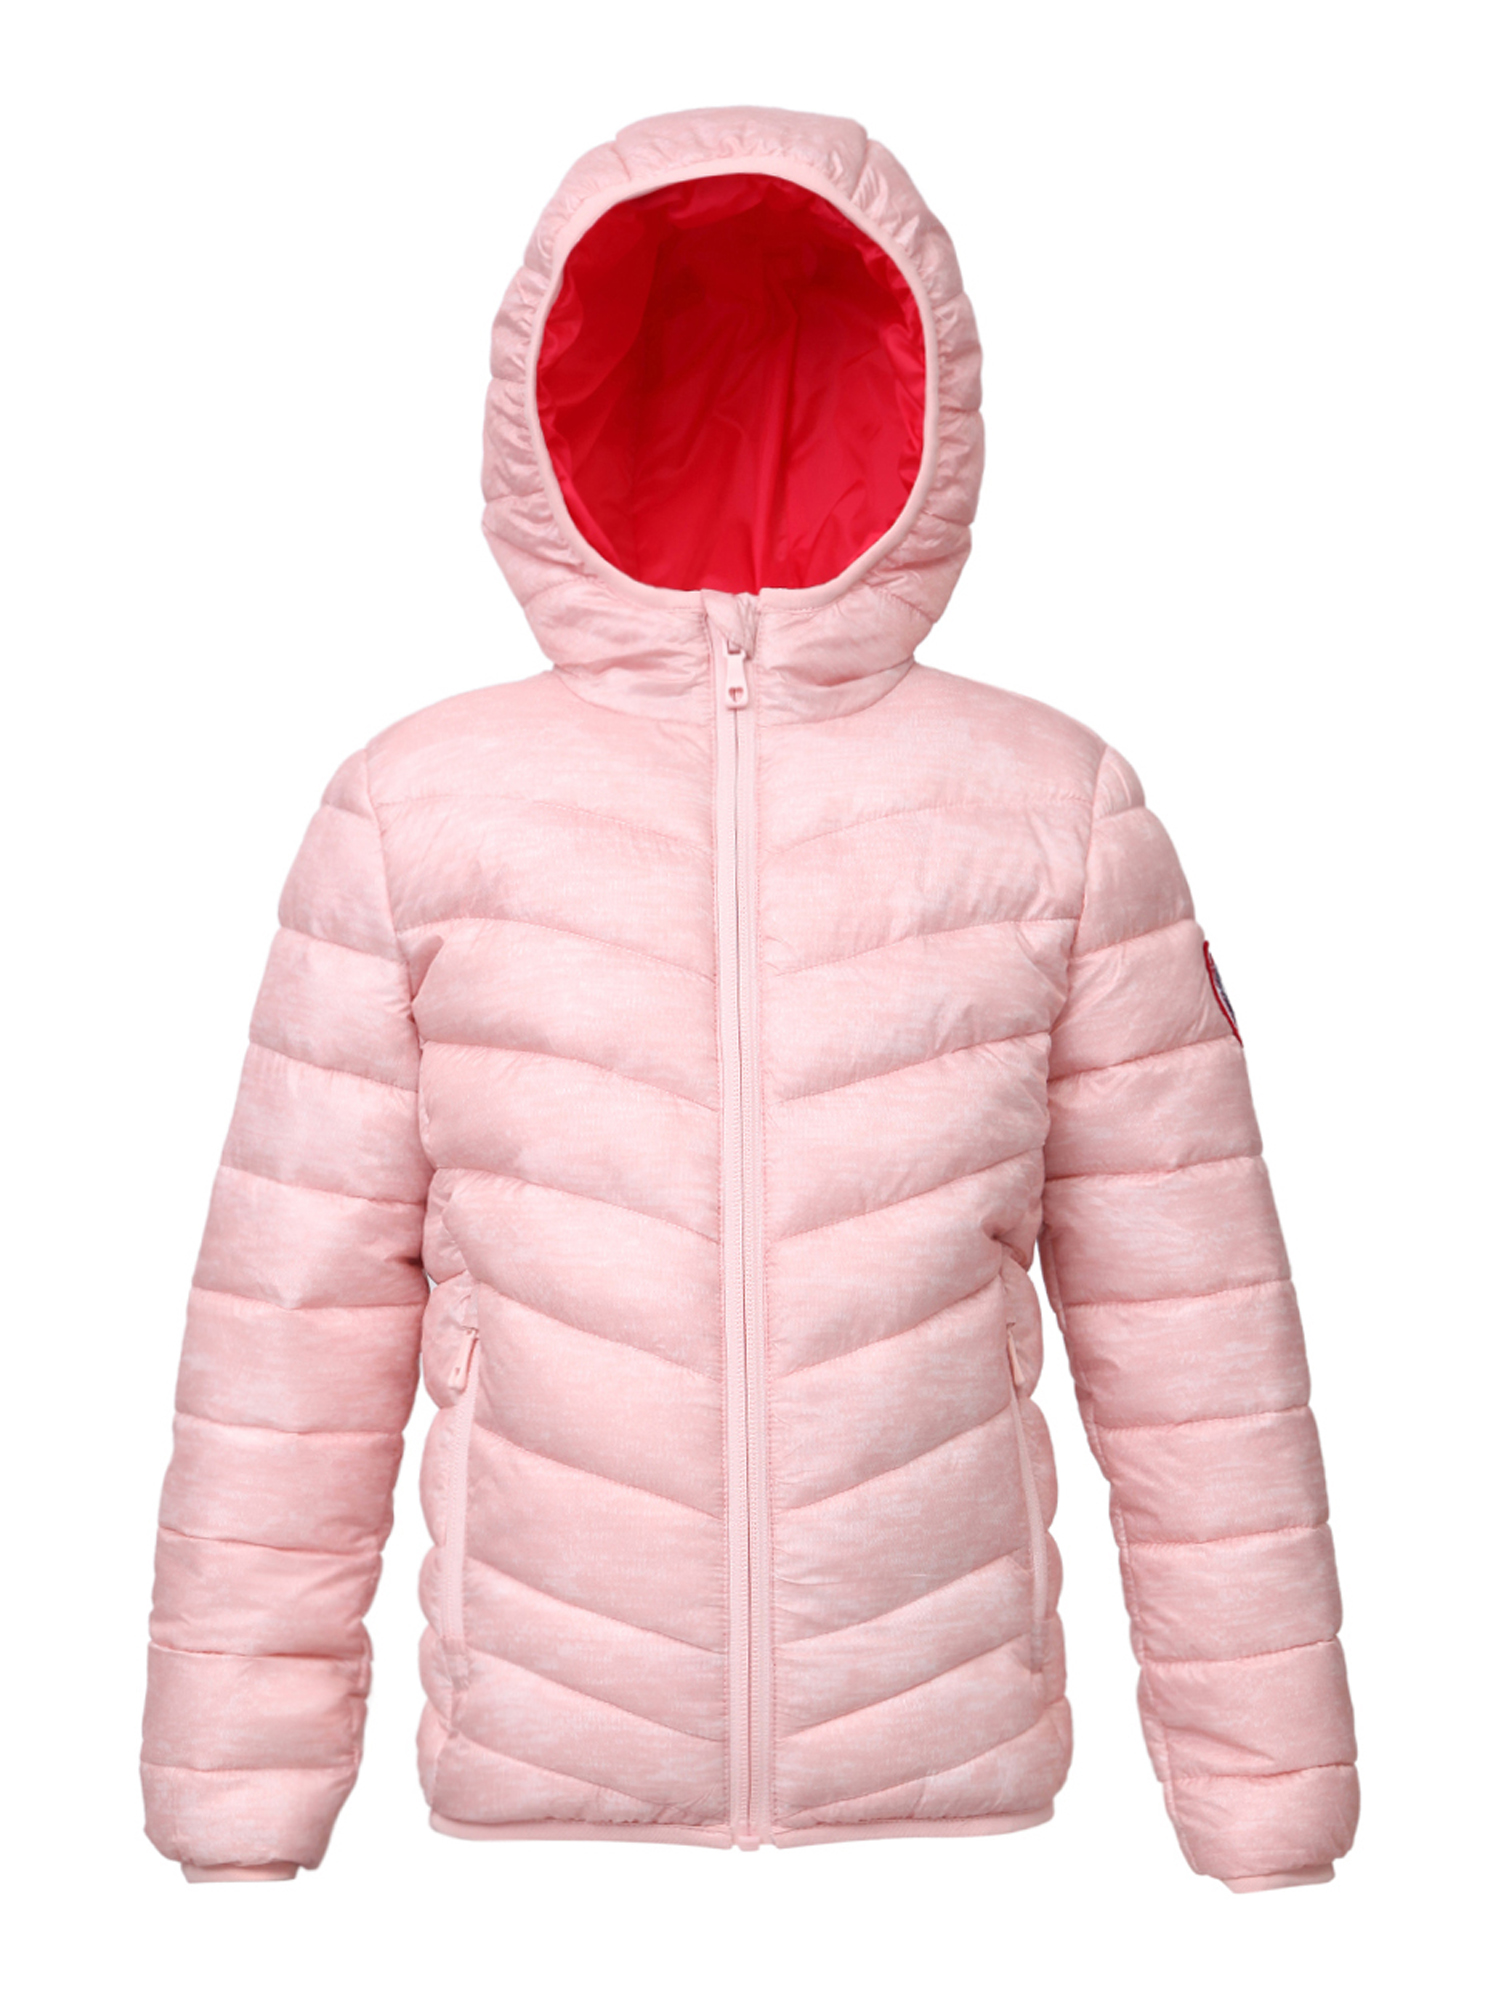 Rokka&Rolla Girls' Reversible Light Puffer Jacket Coat, Sizes 4-18 - image 1 of 9